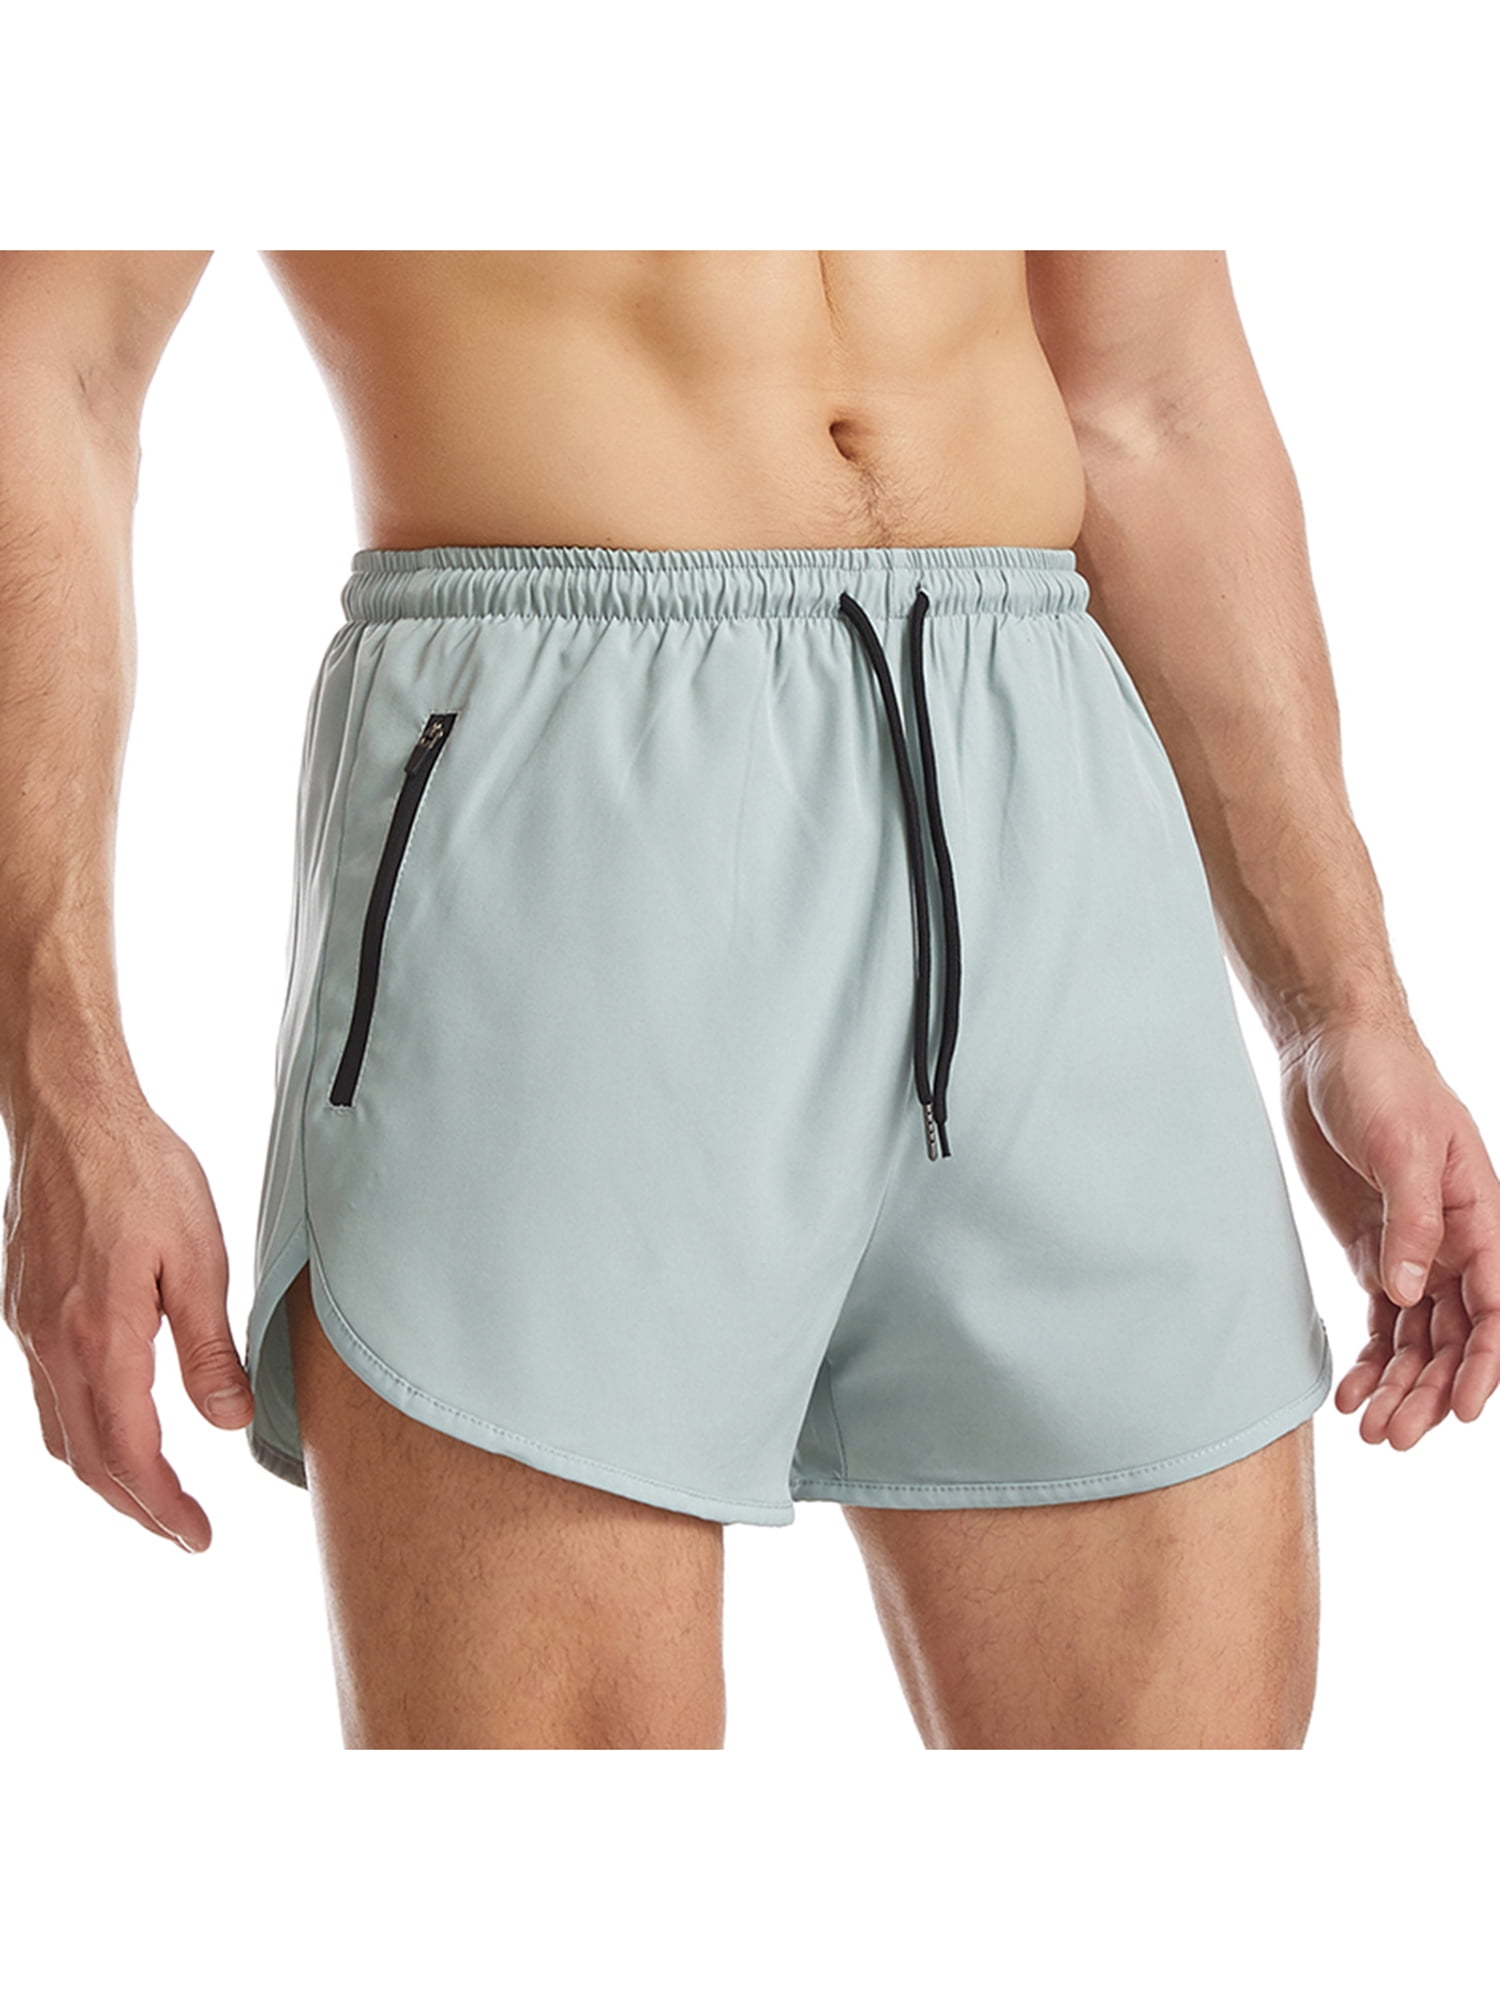 FOCUSNORM Men's Sports Short Pants,Solid Color with Zipper